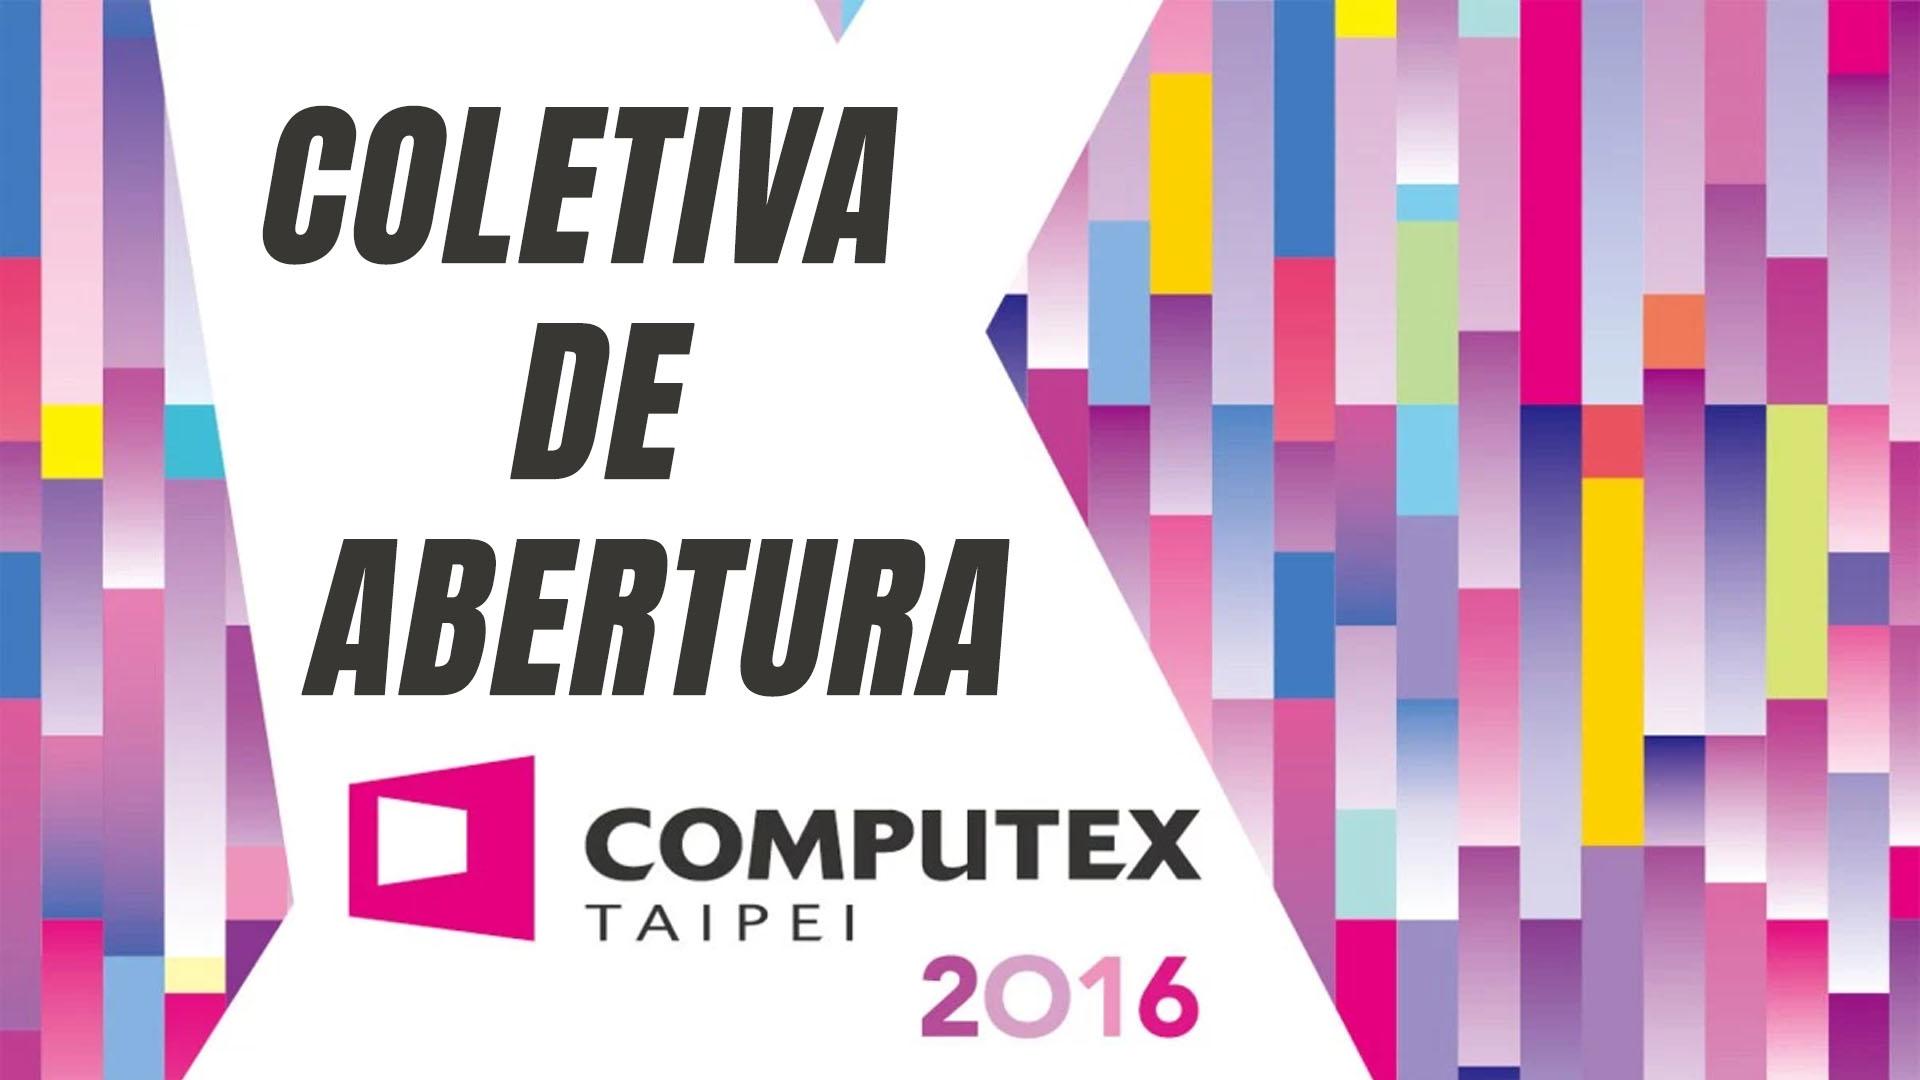 Computex 2016: Coletiva de imprensa de abertura